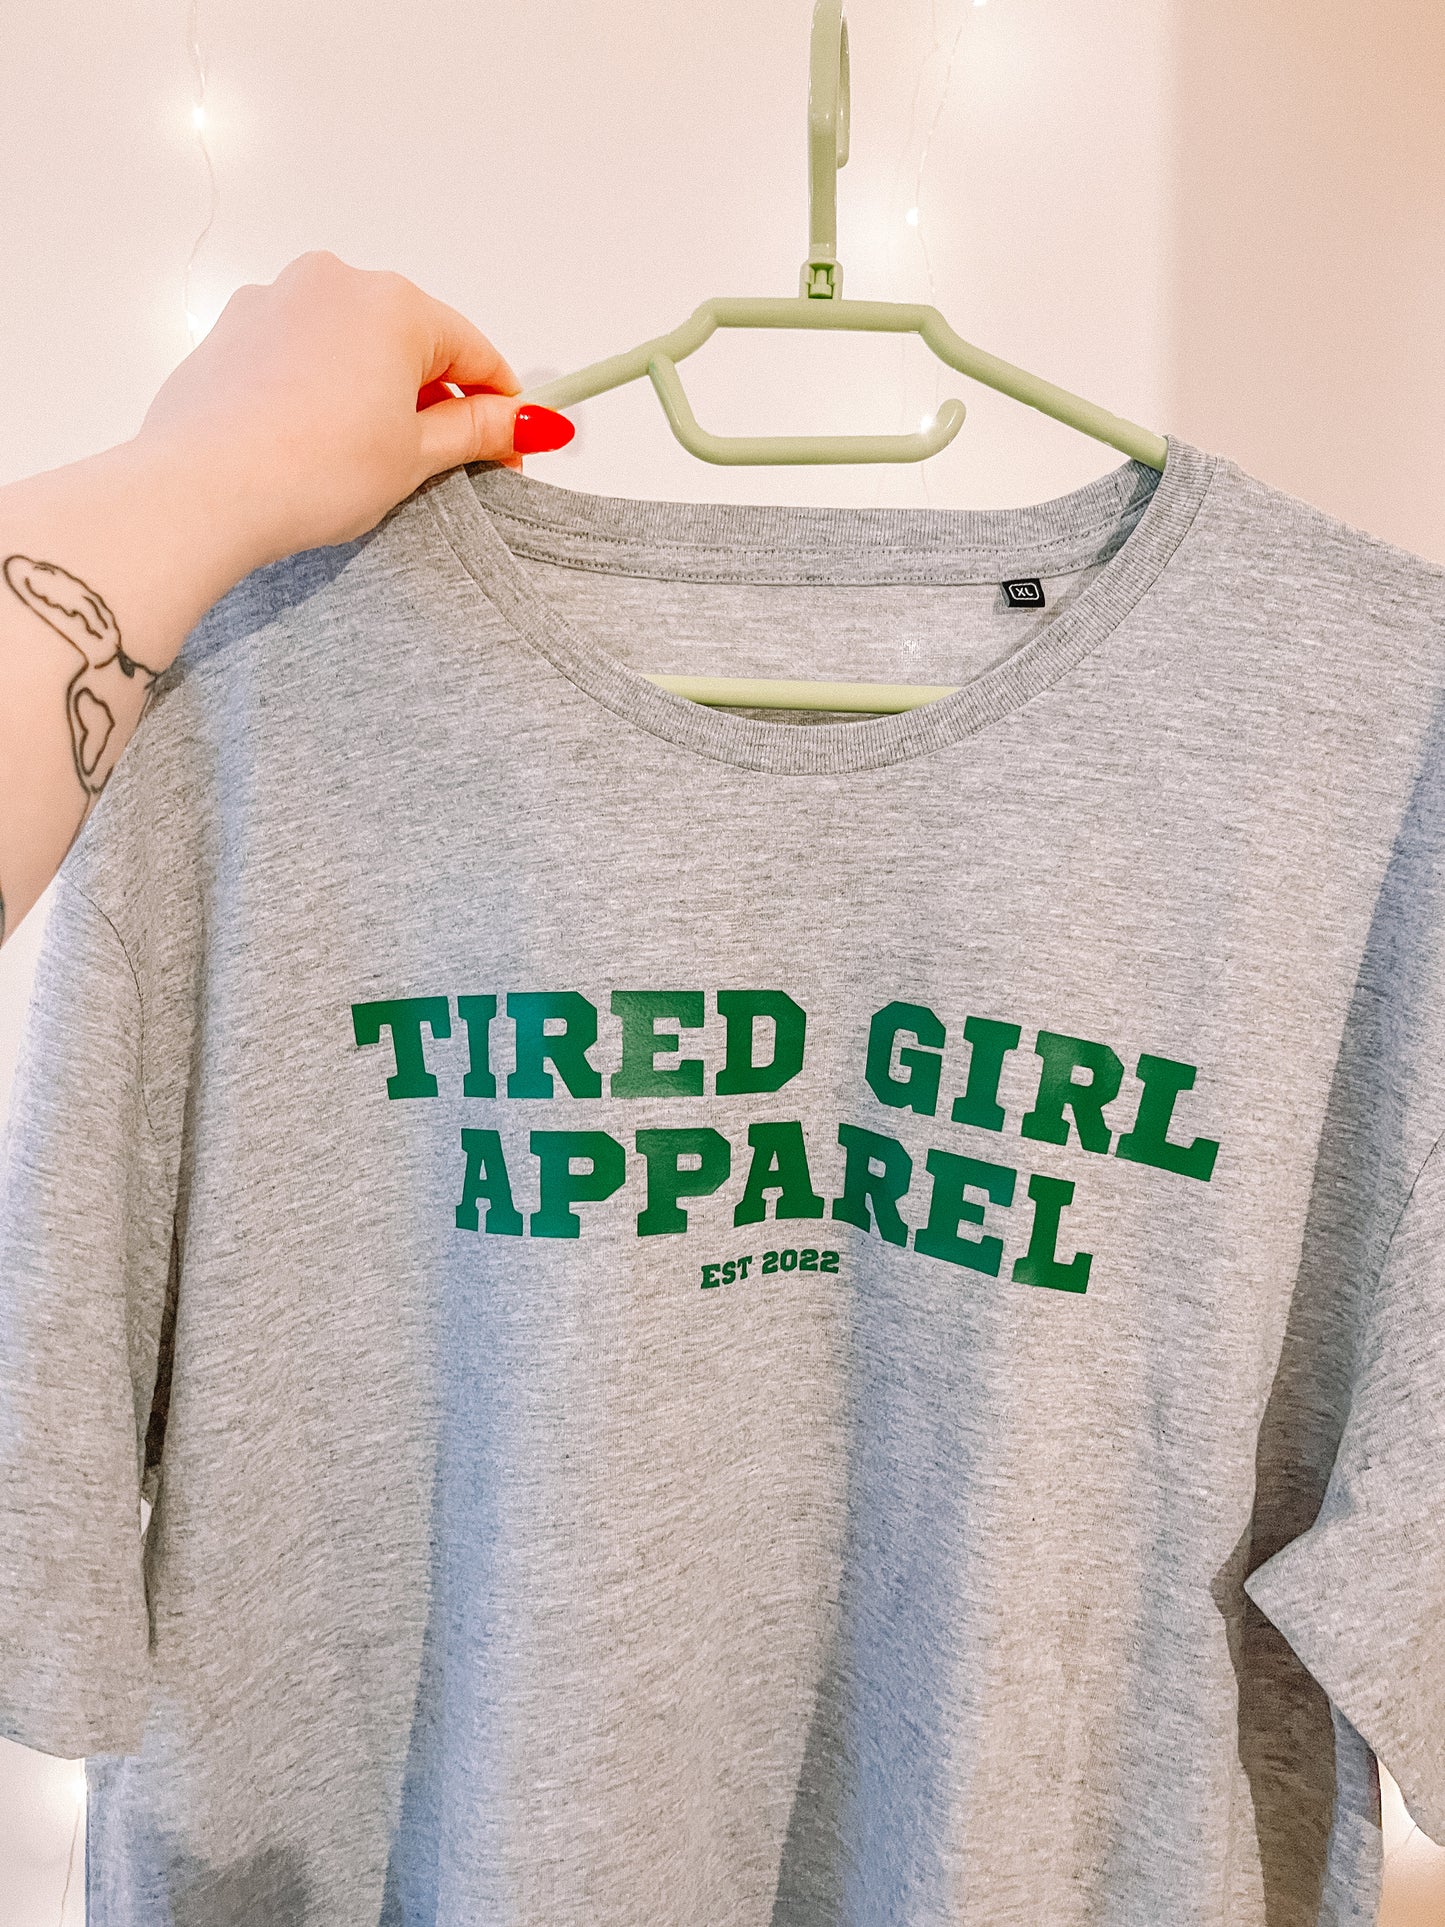 Tired Girl Apparel Printed T-shirt